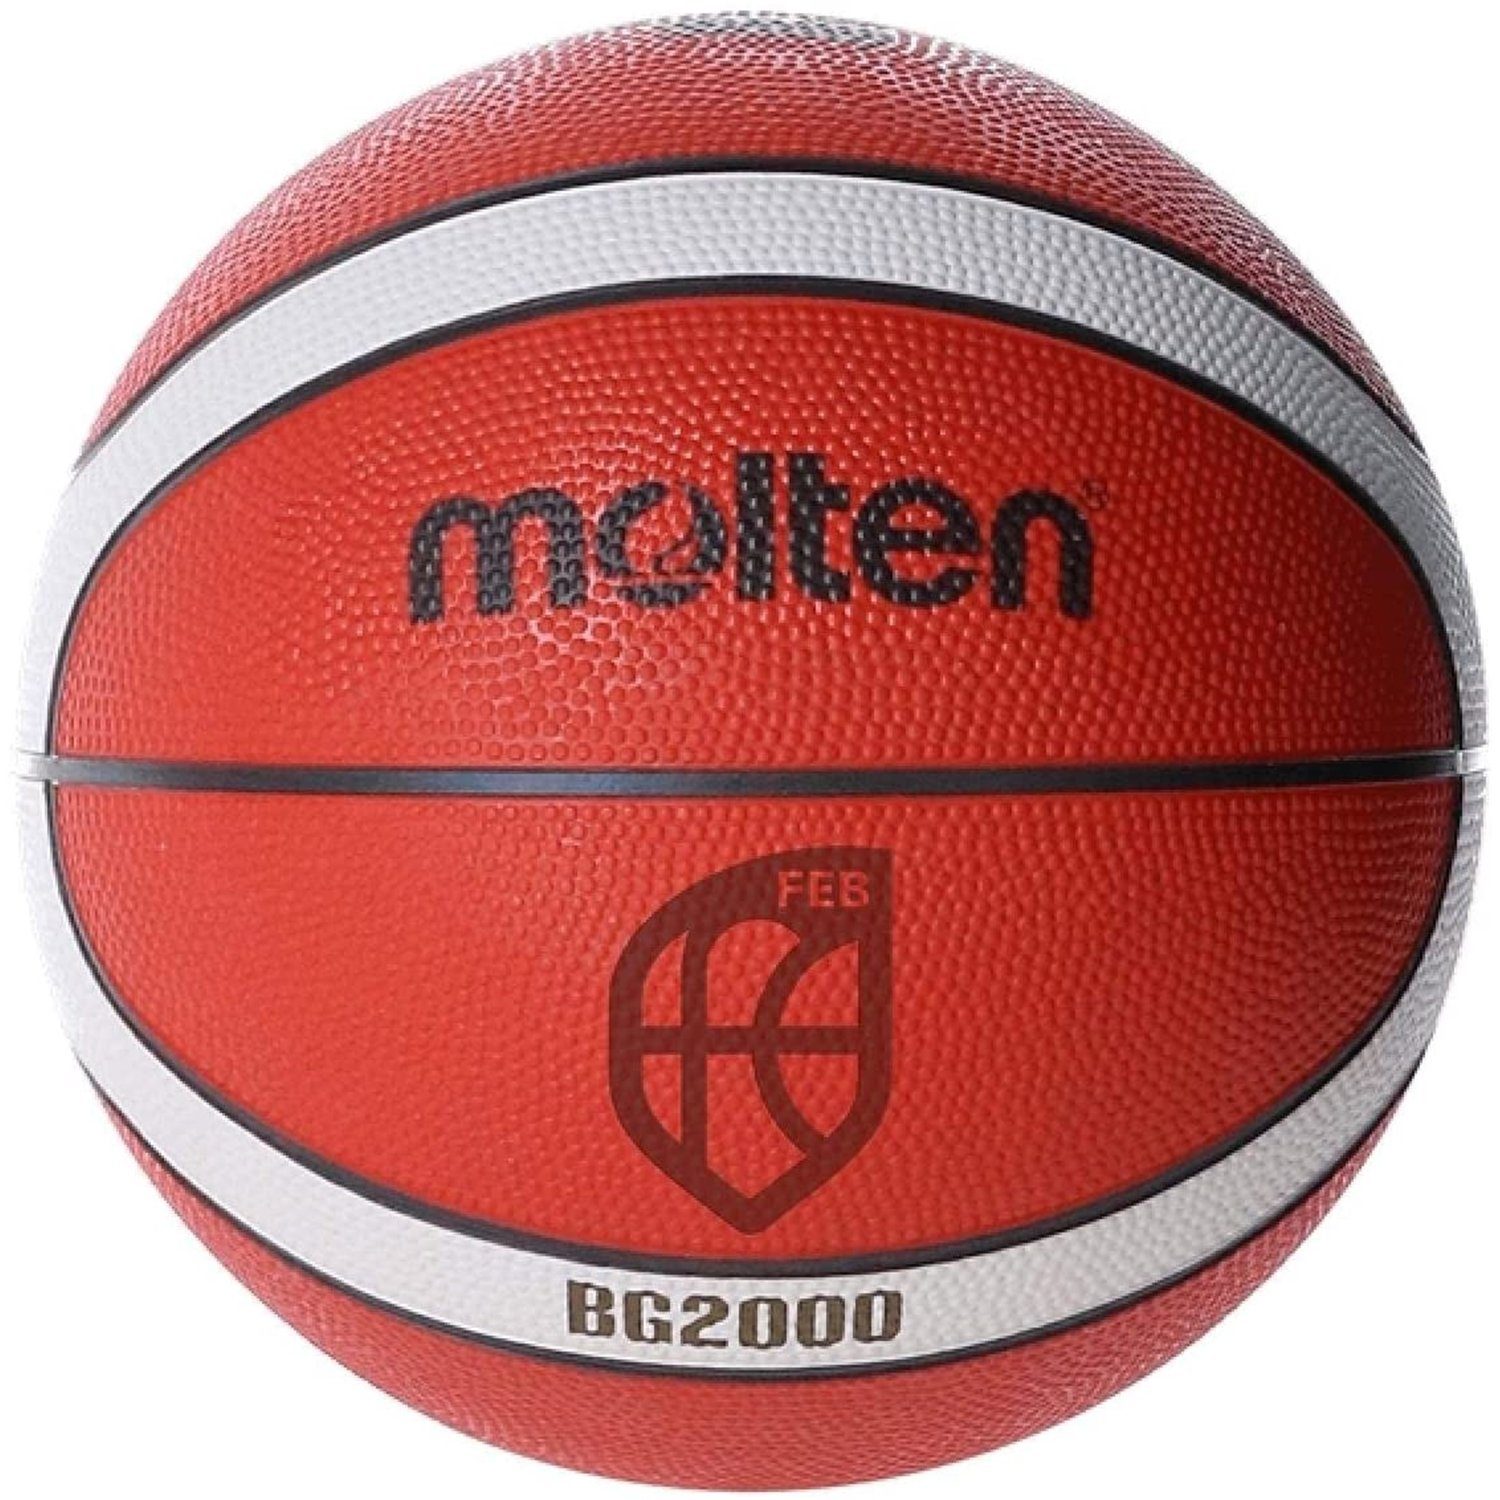 Molten Basketballkorb Orange/ivory B3G2000 / Basketball